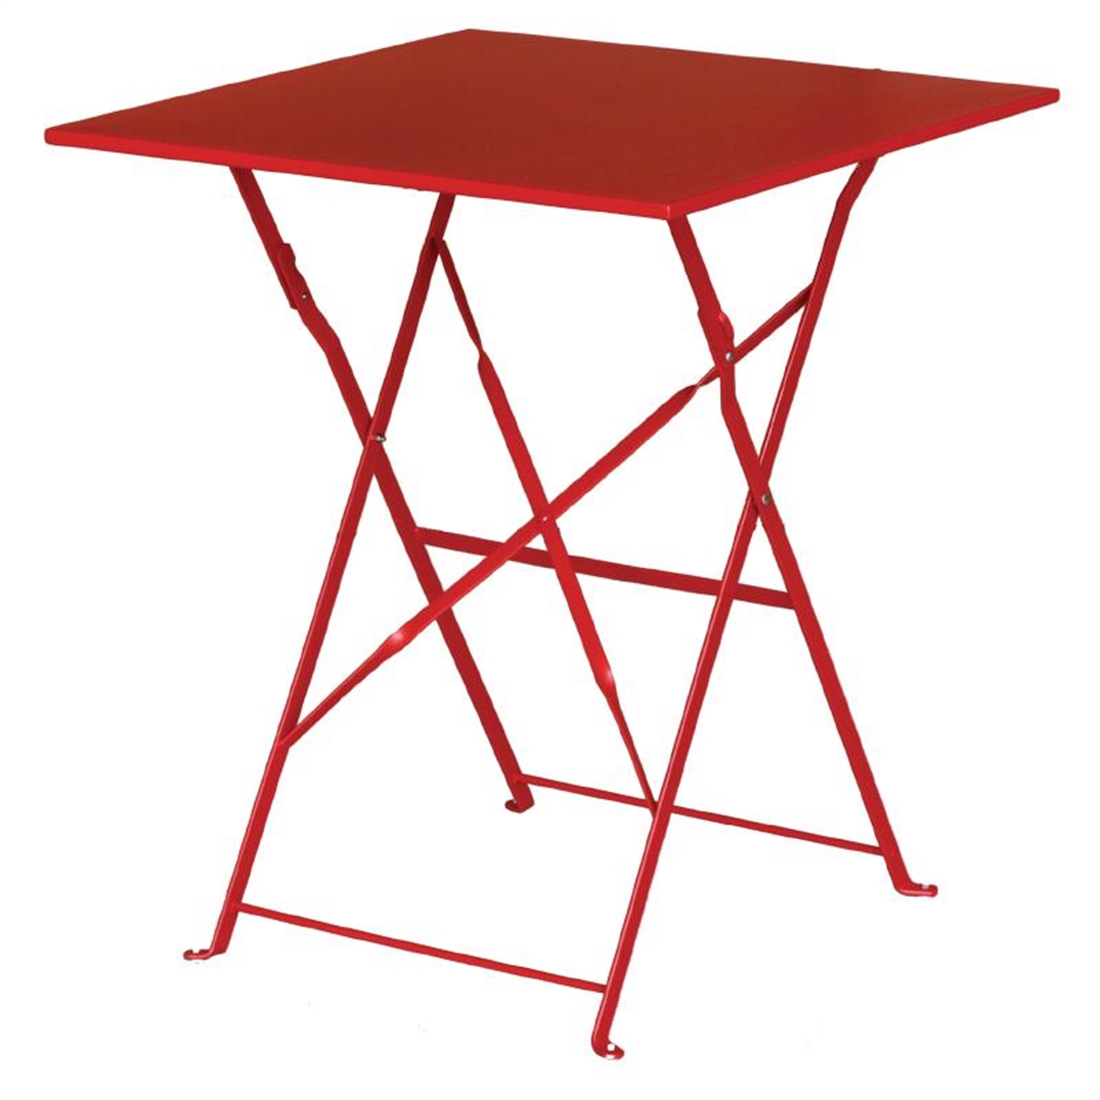 Bolero Red Square Pavement Style Steel Table